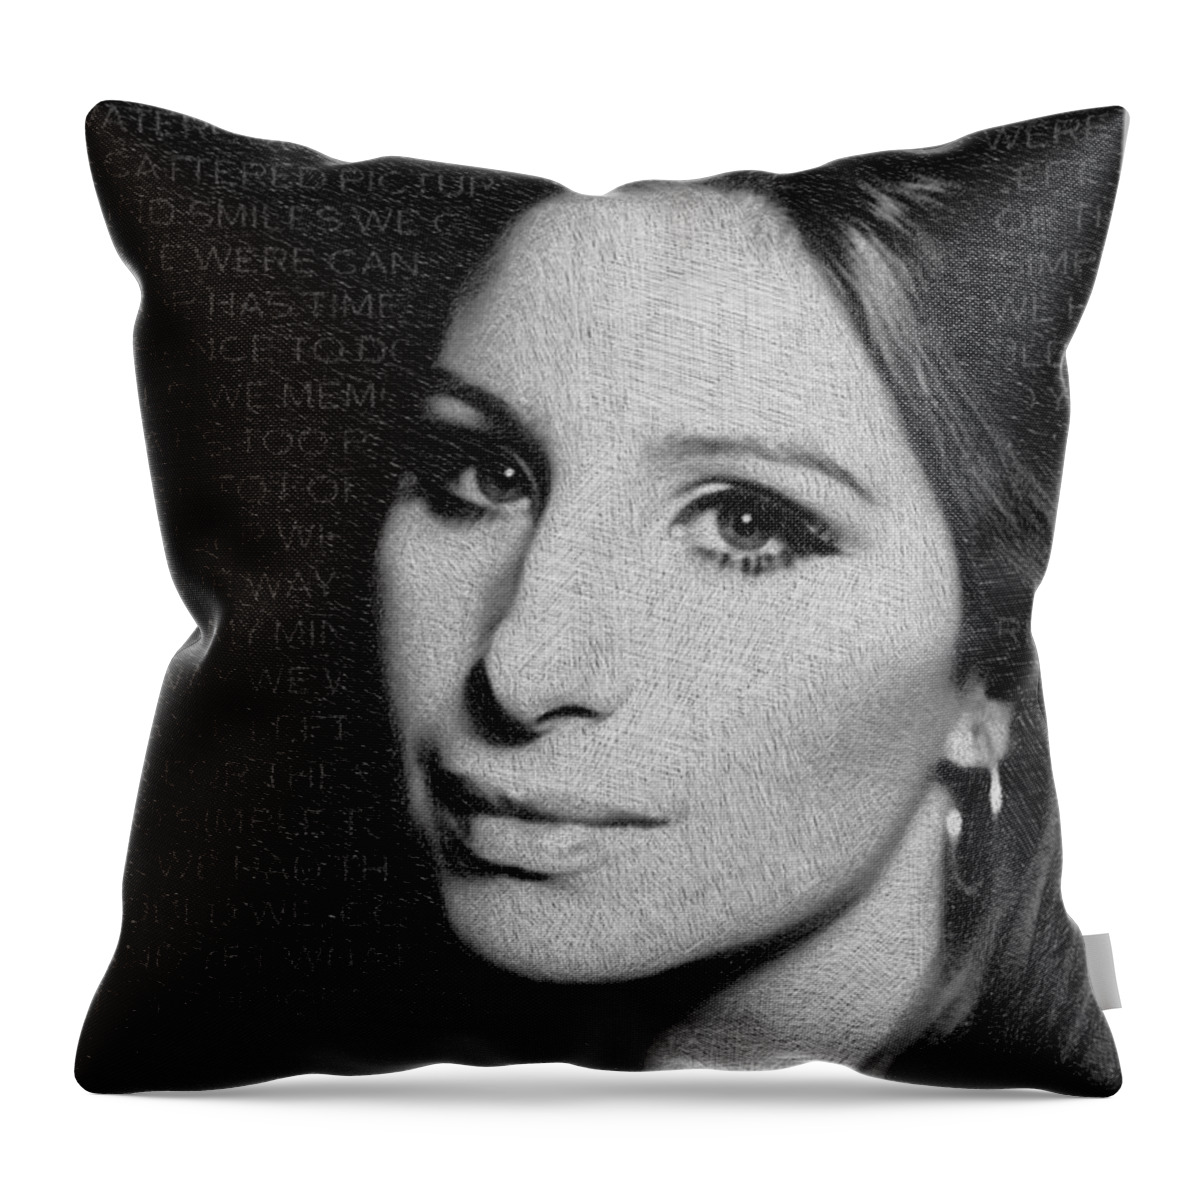 Barbra Streisand Throw Pillow featuring the painting Barbra Streisand And Lyrics by Tony Rubino